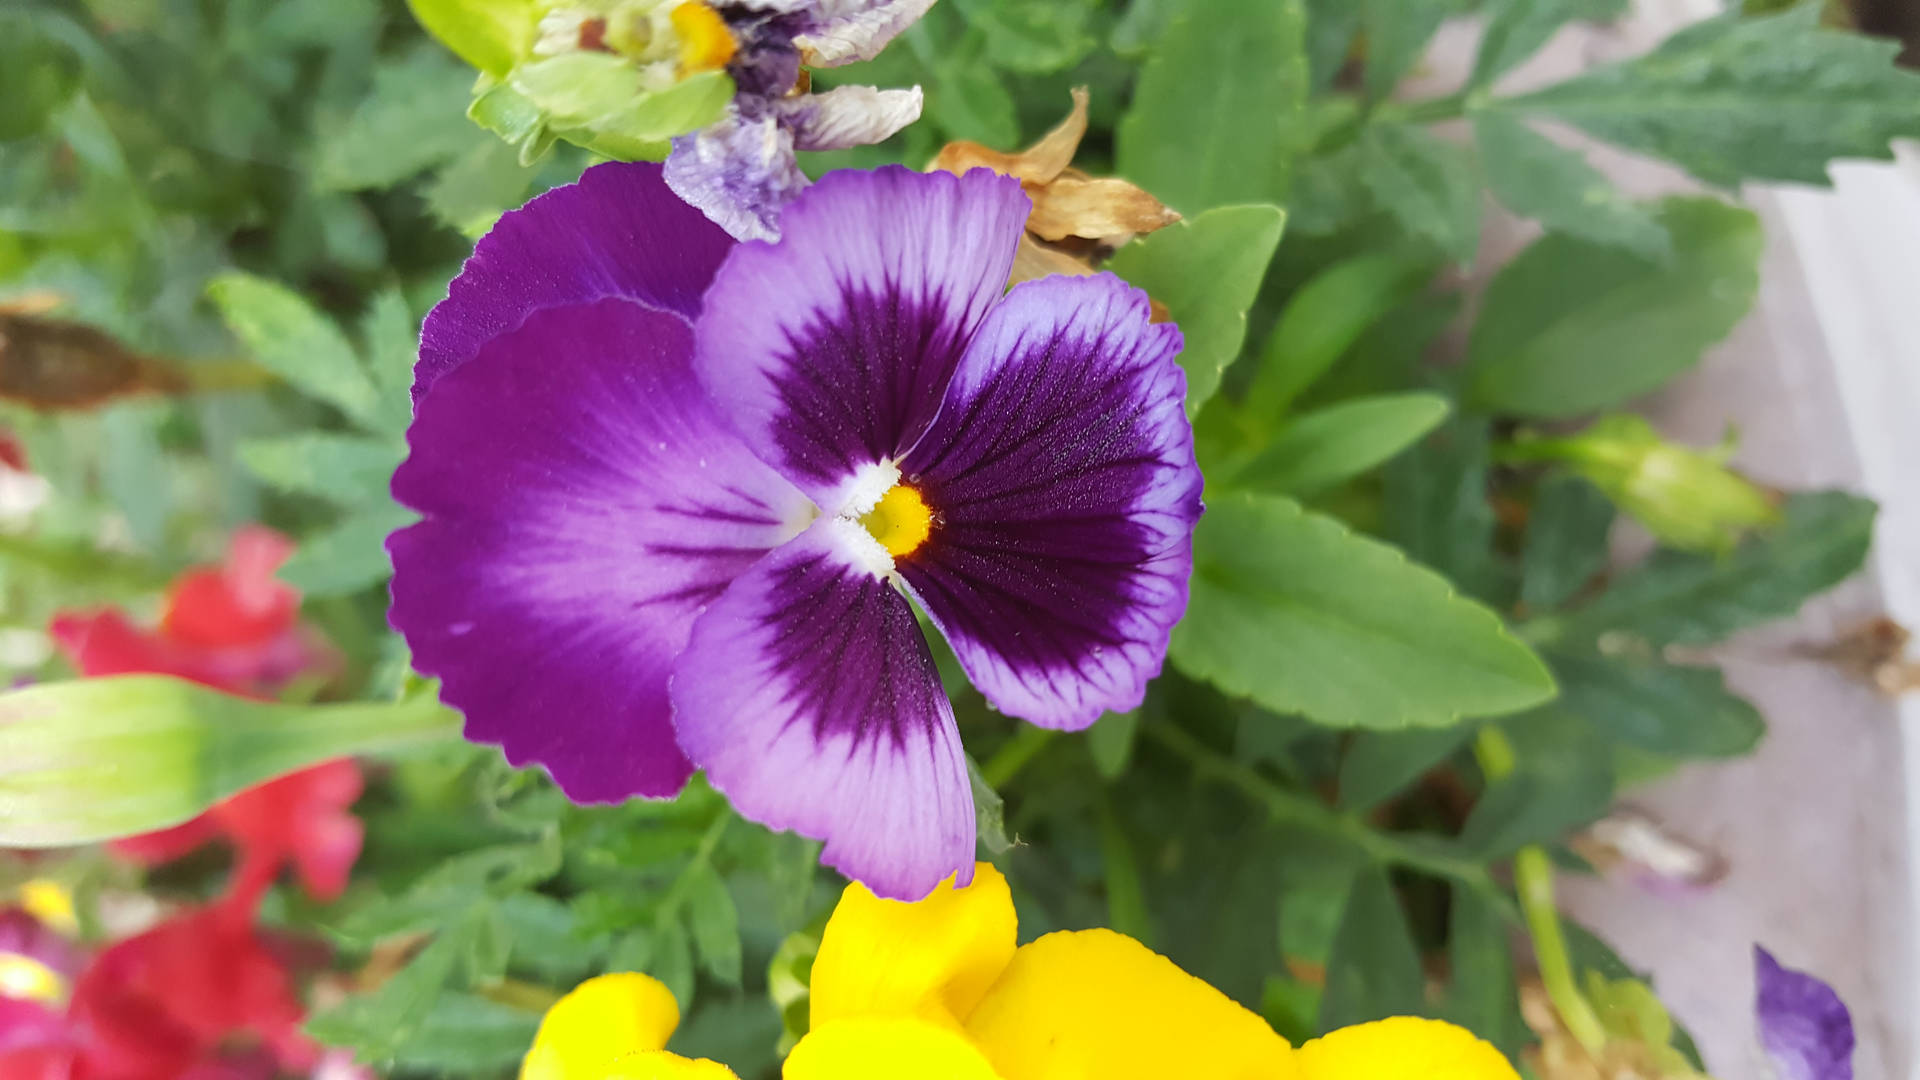 Enchanting Purple-yellow Flower In Bloom